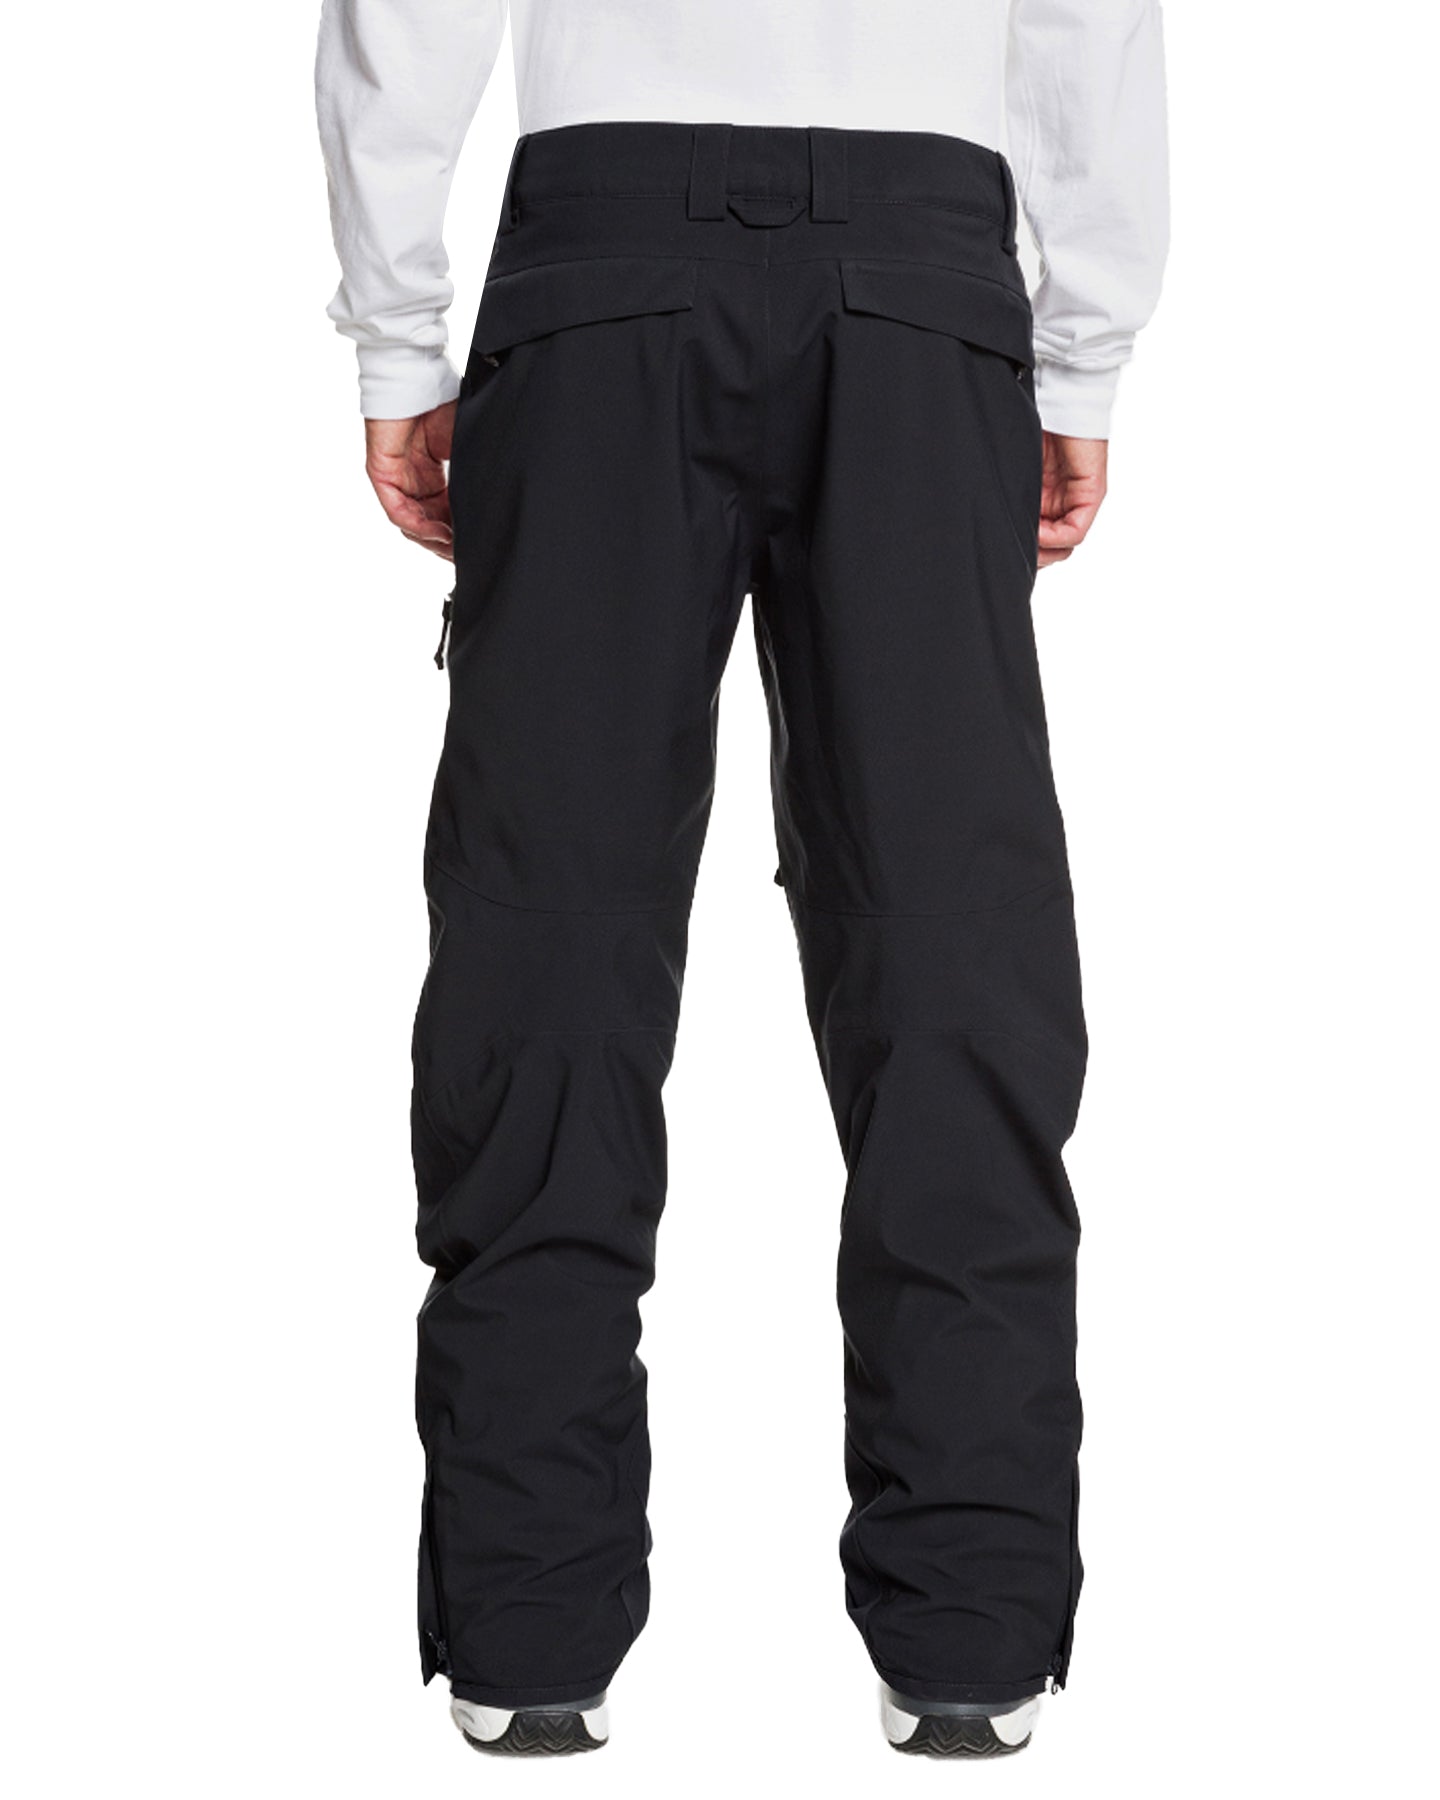 Quiksilver Men's Utility Shell Snow Pants - True Black Men's Snow Pants - Trojan Wake Ski Snow